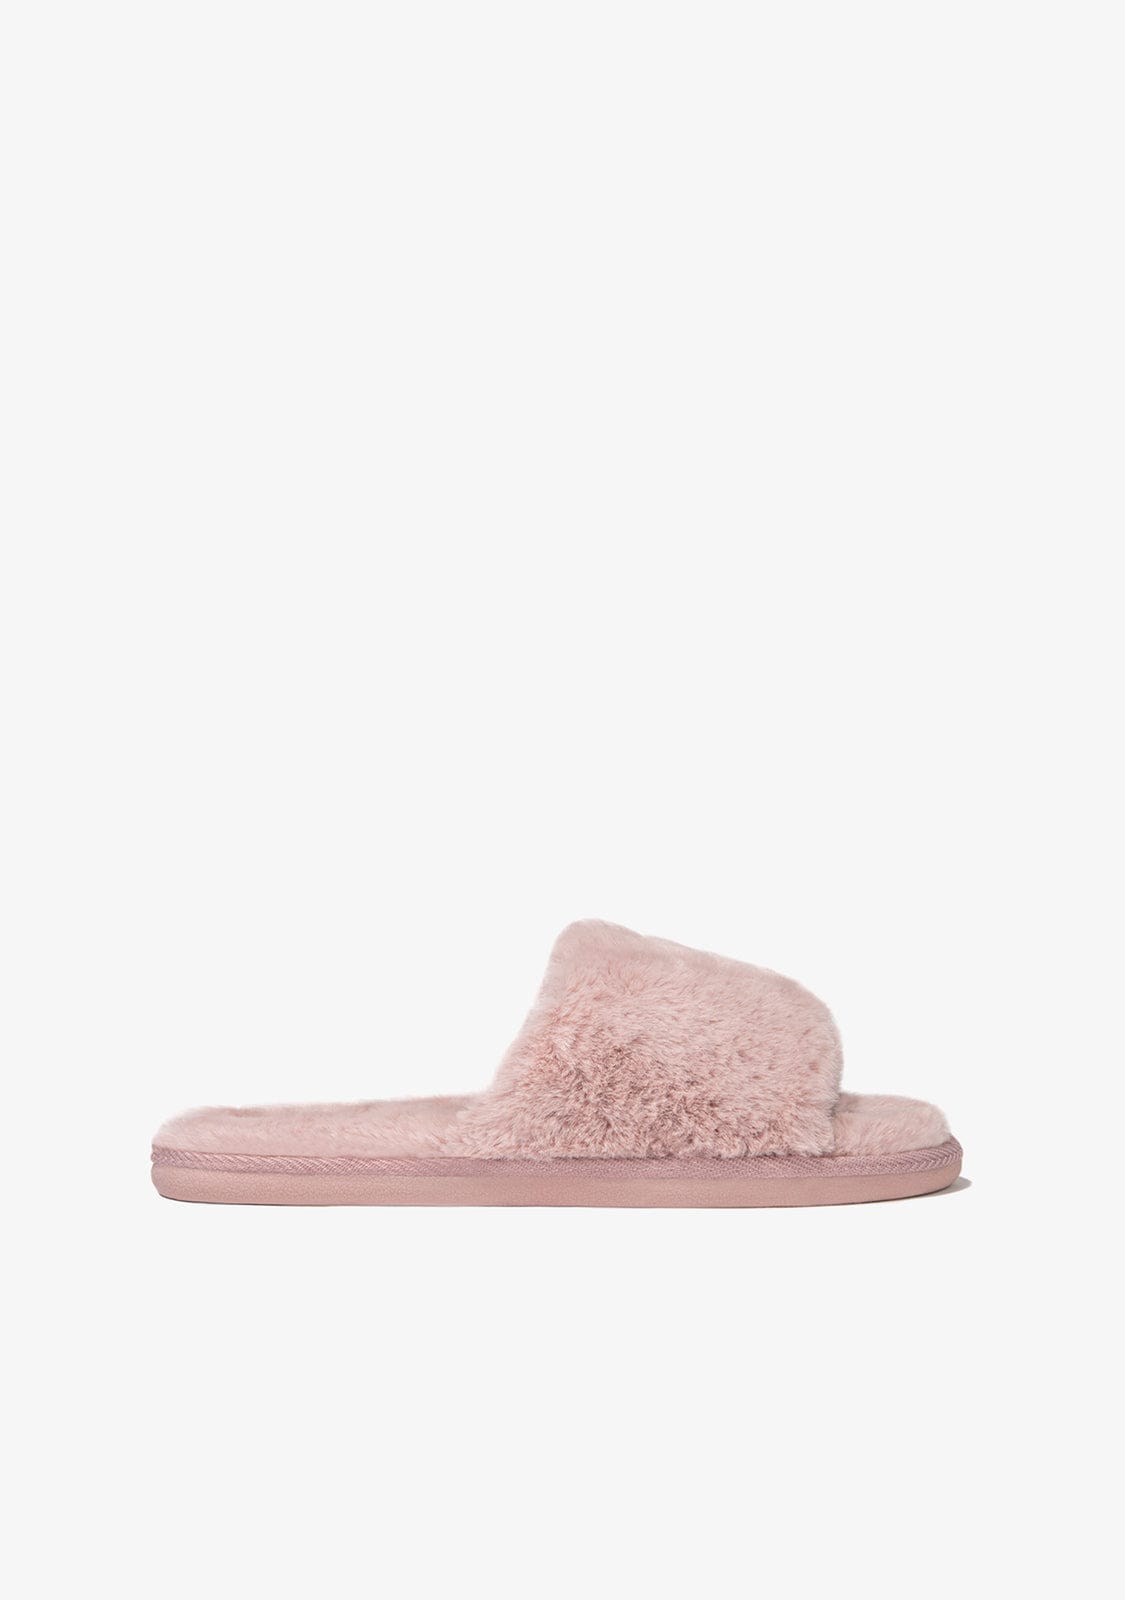 B & W Shoes Open Toe Pink Home Slipper